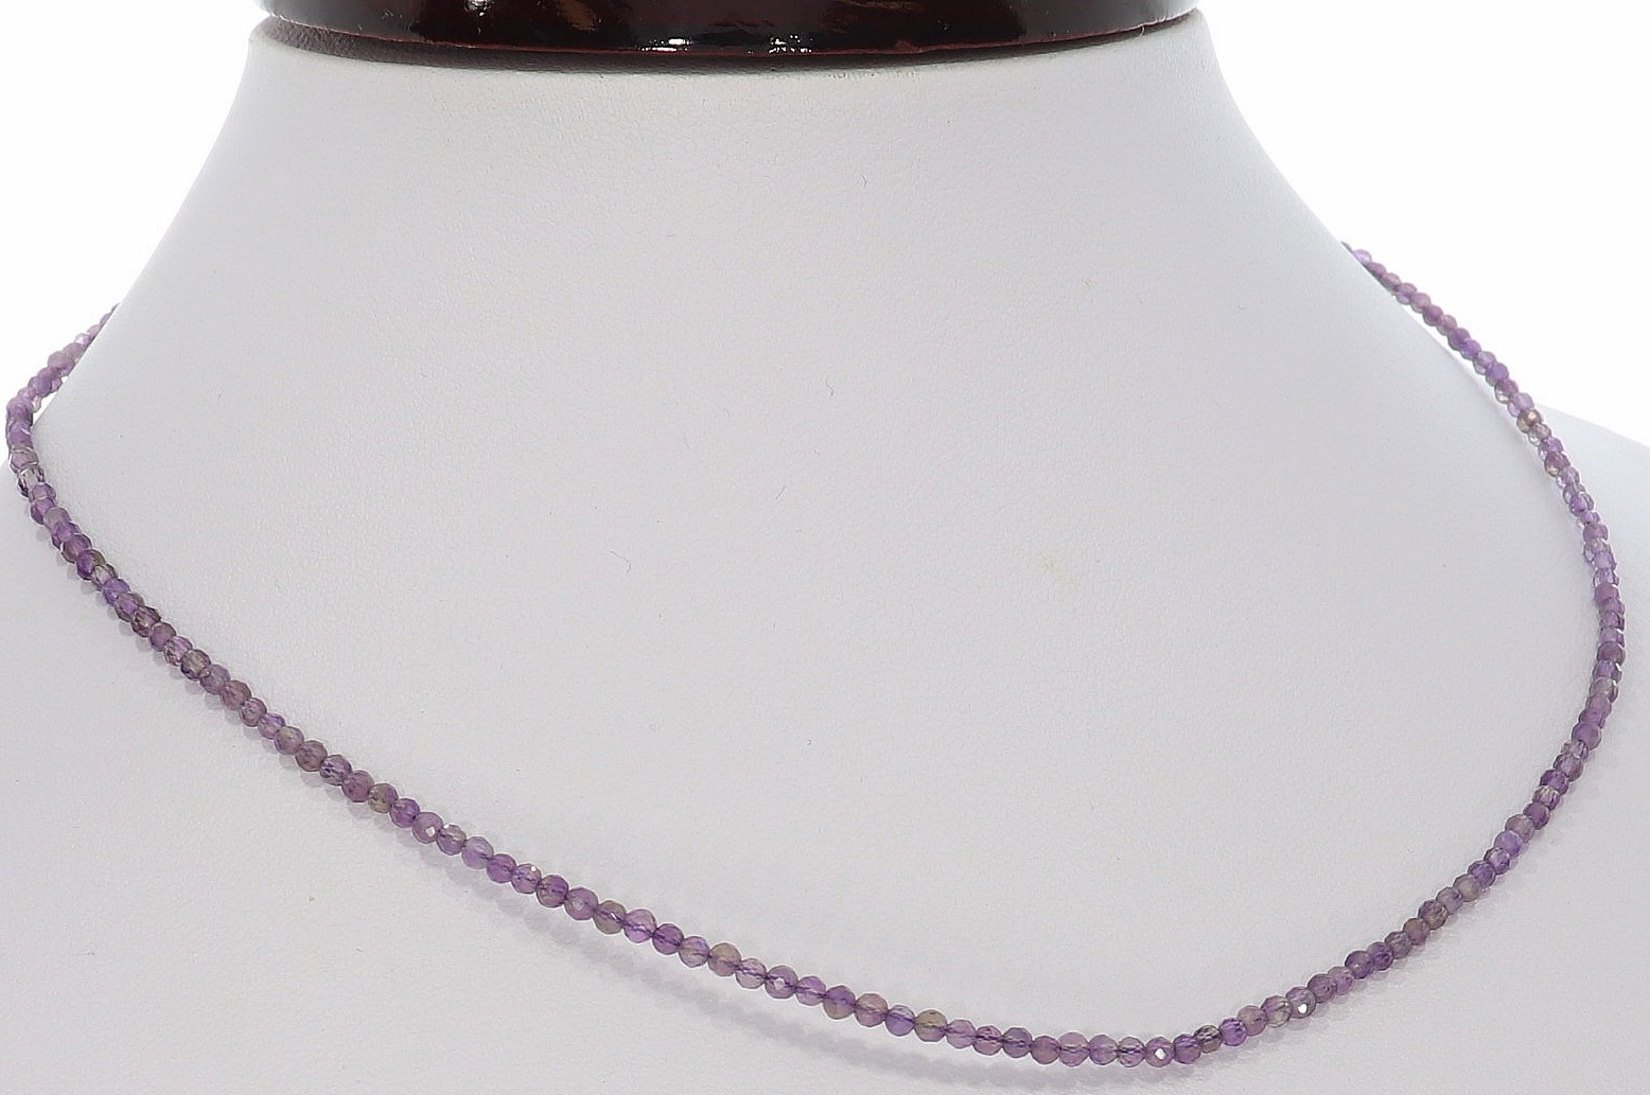 Amethyst Kugel Halskette facettiert Silber farben 2mm - 40-45cm Kettenverlängerer KK318